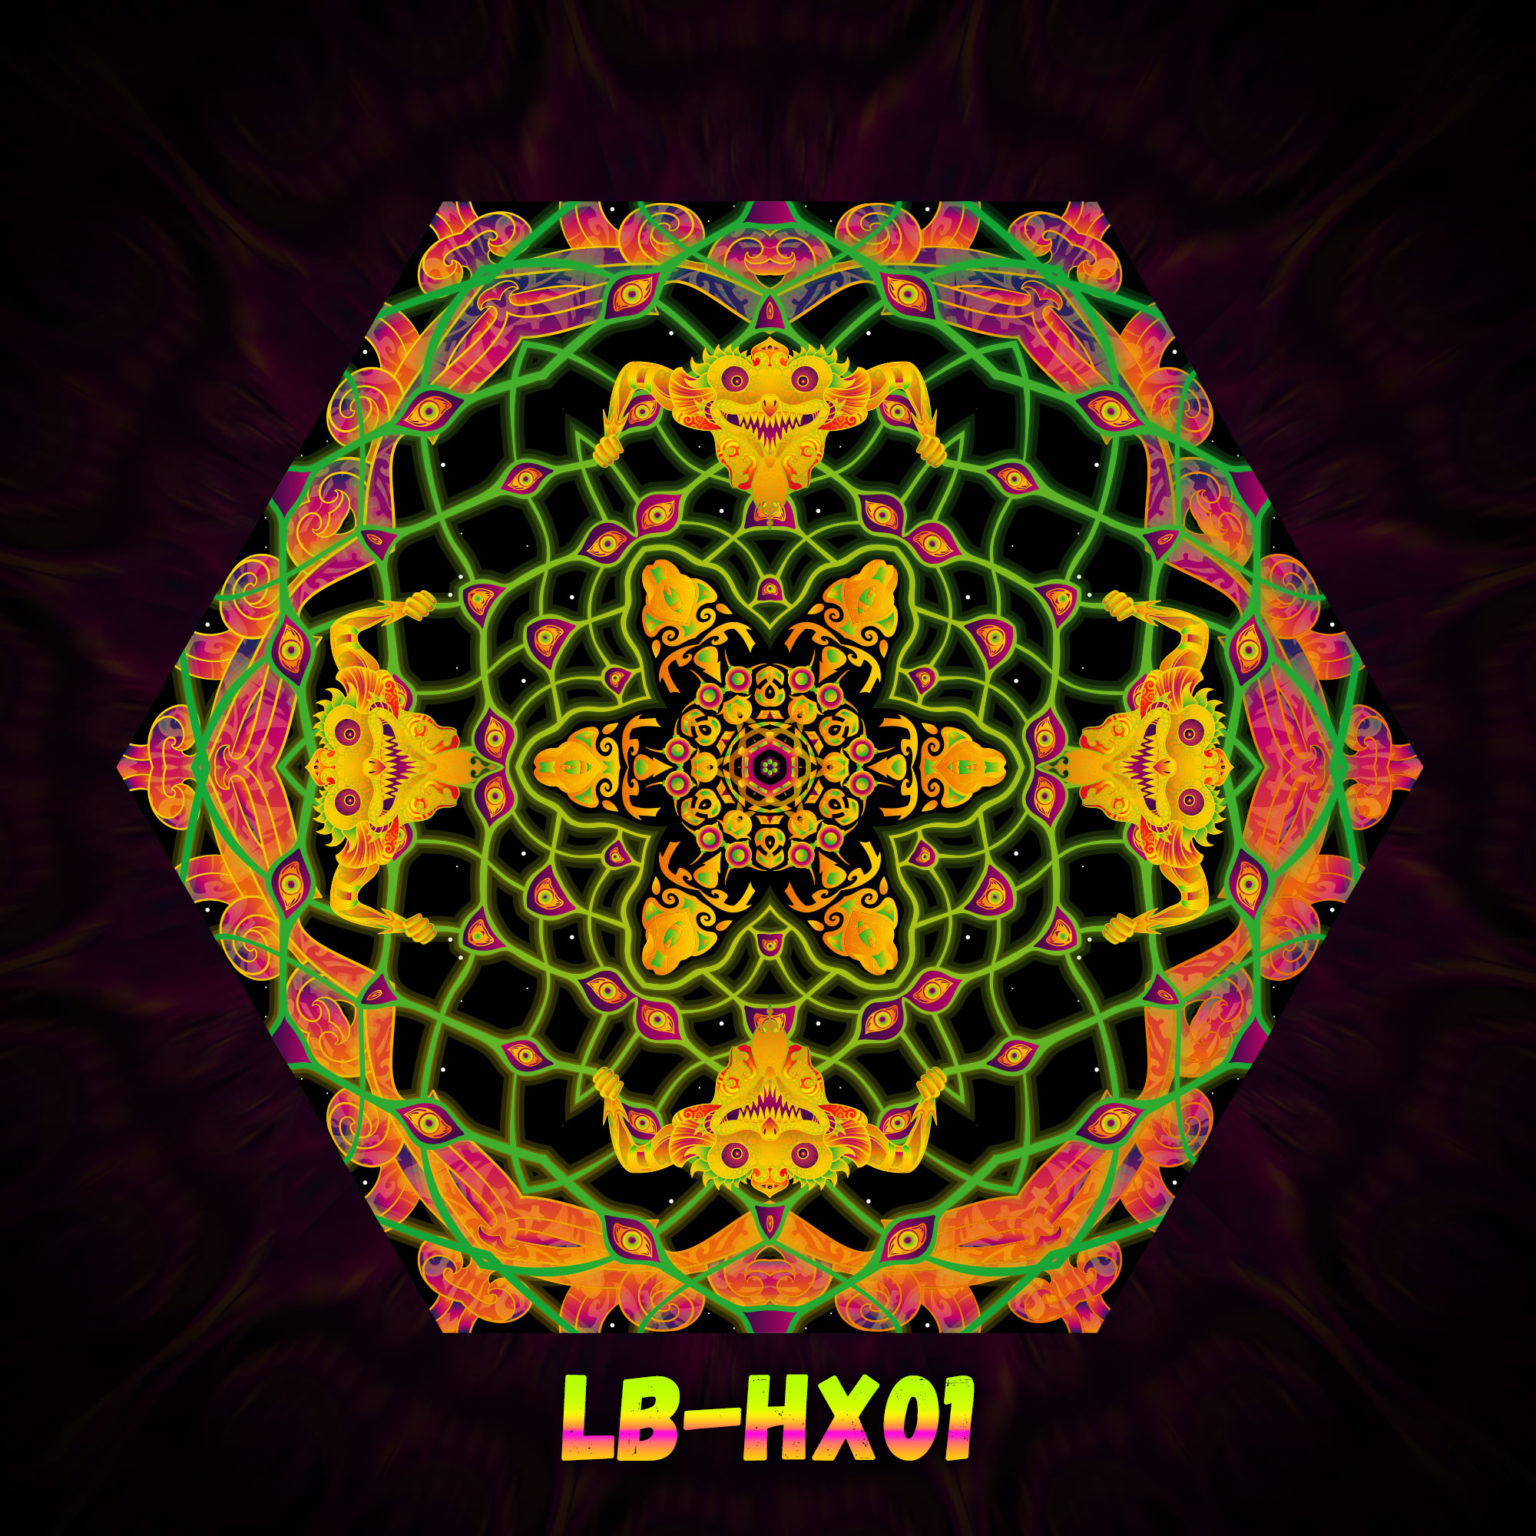 LB-HX01- UV-Hexagon - Psychedelic UV-Reactive Ceiling Decoration Element - Design Preview